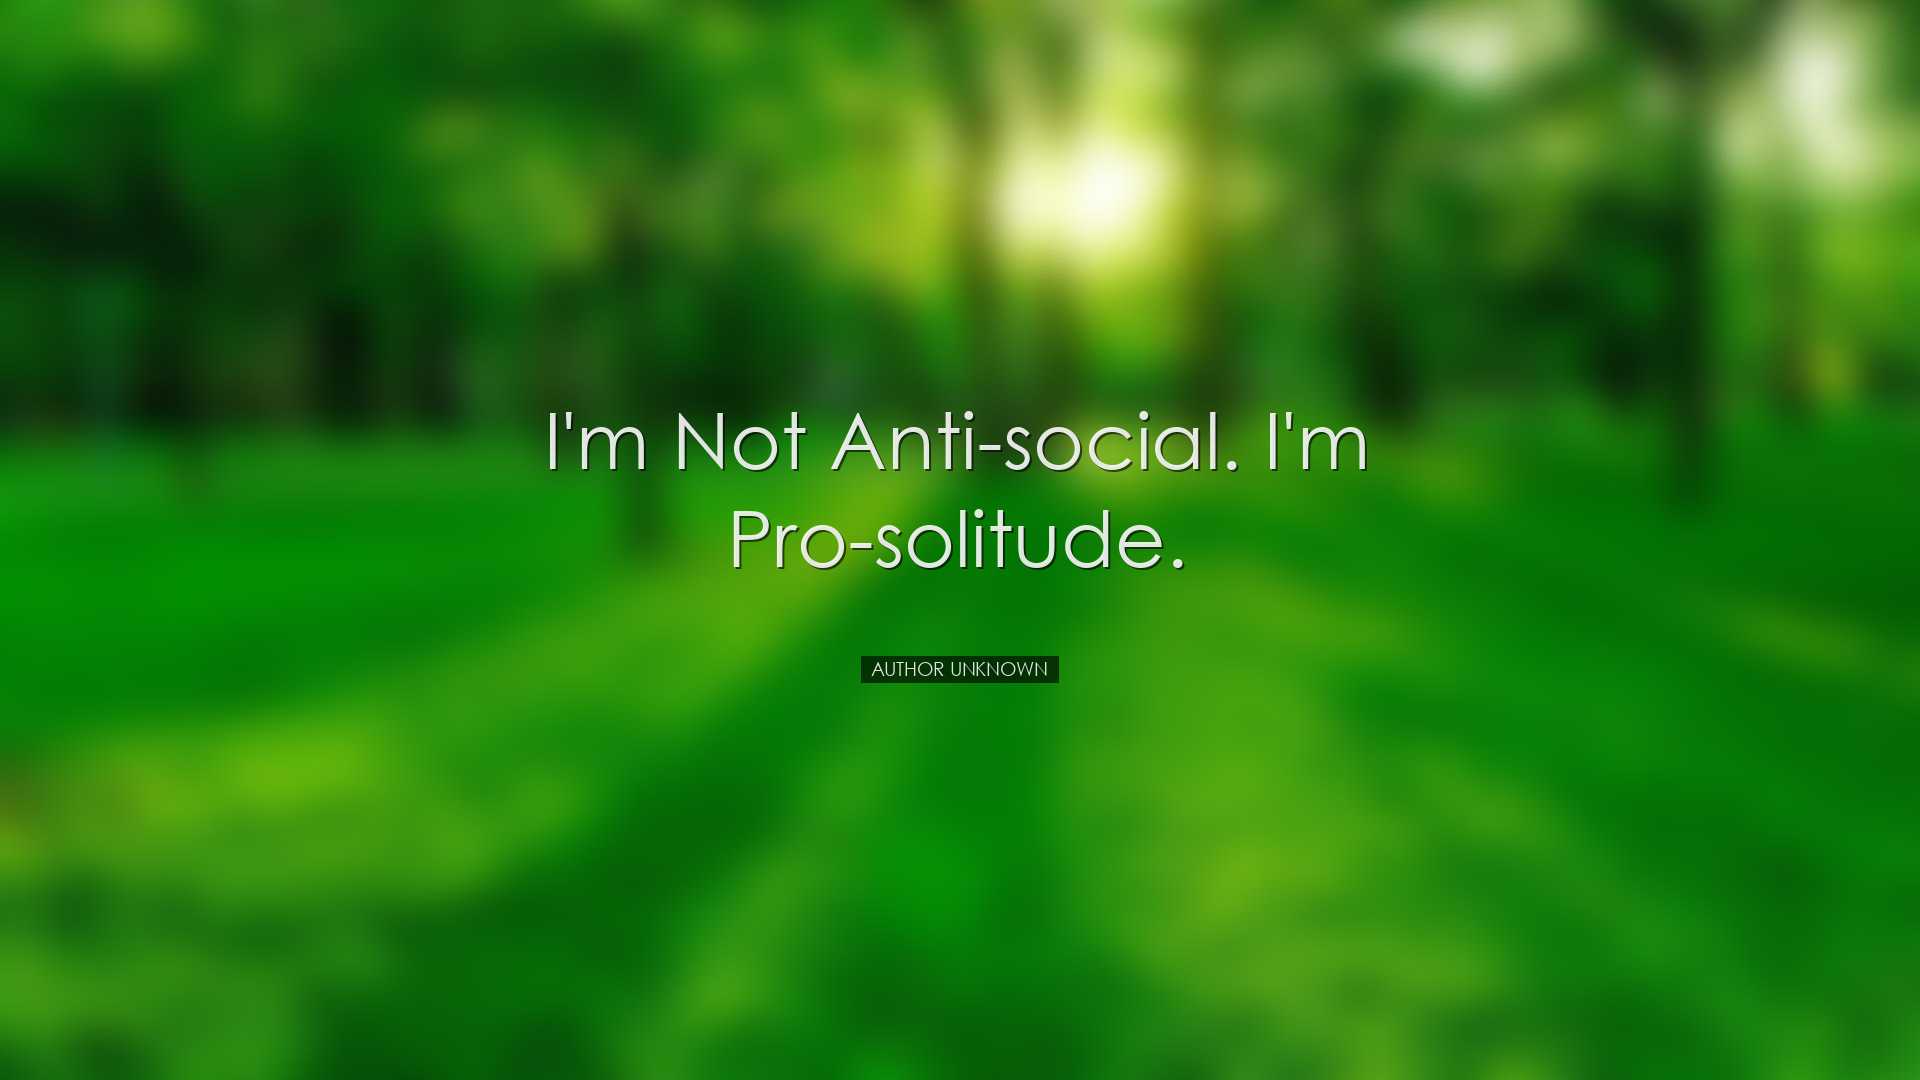 I'm not anti-social. I'm pro-solitude. - Author Unknown